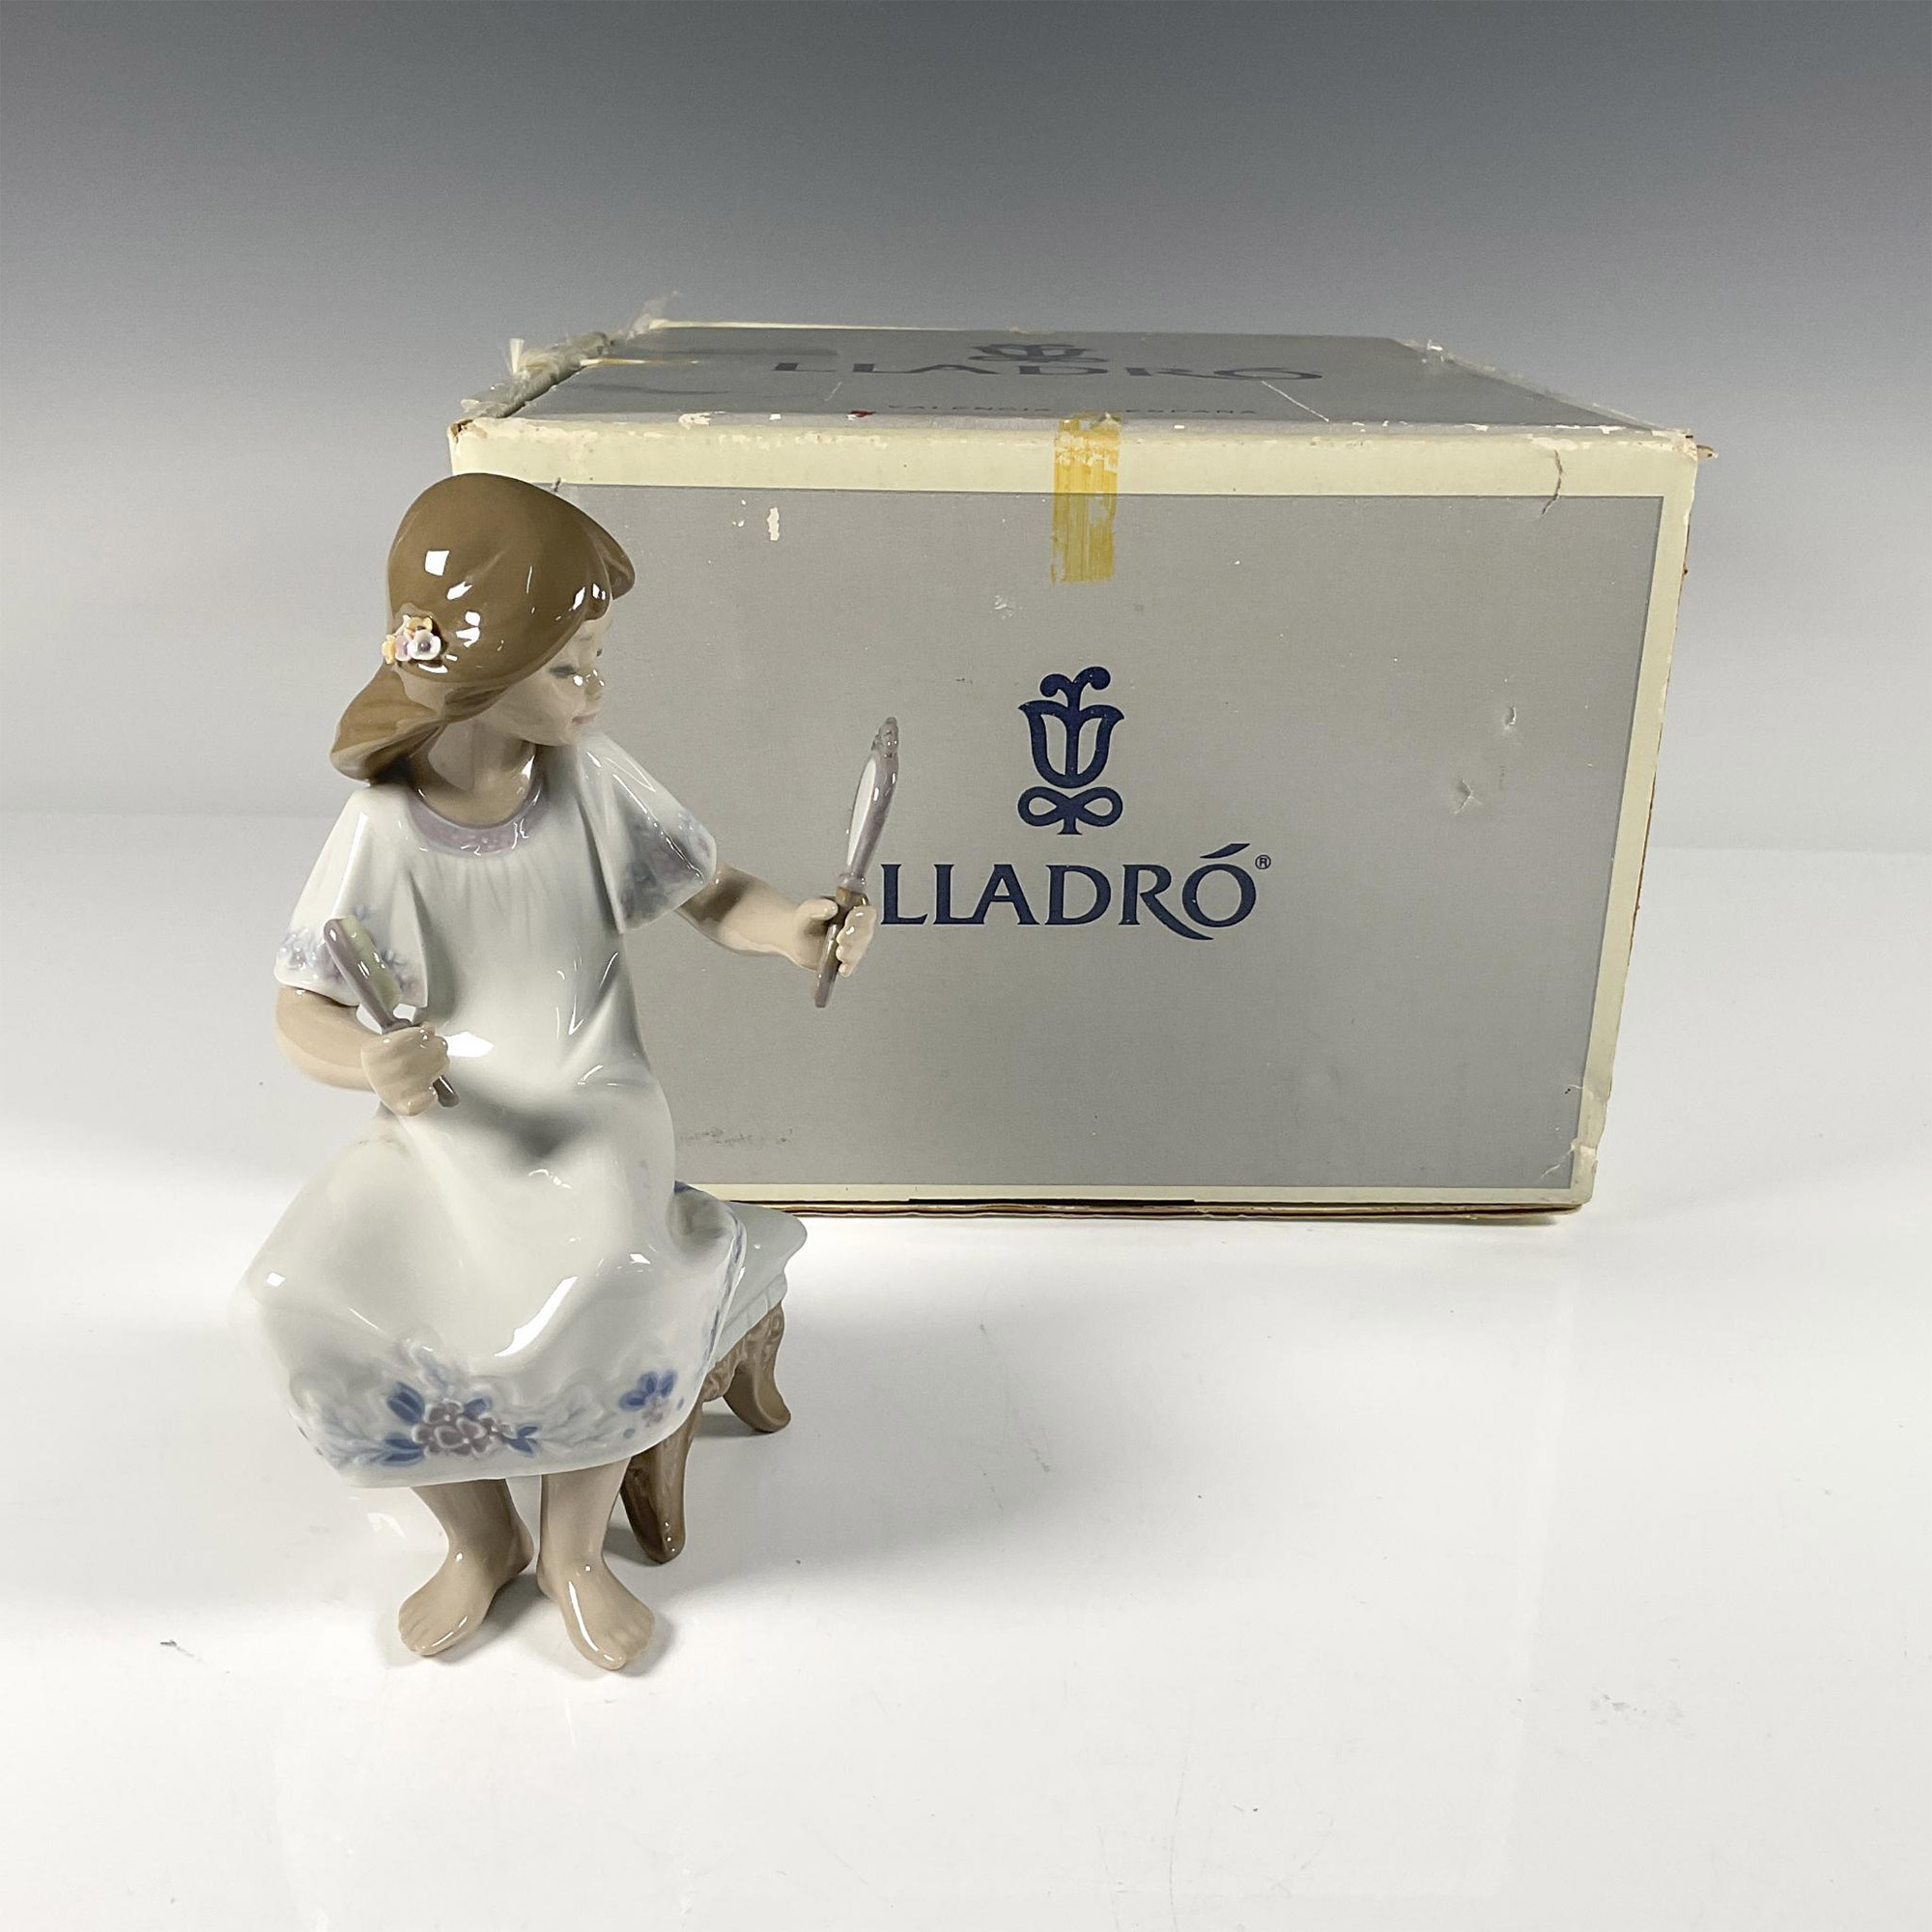 I Feel Pretty 1005678 - Lladro Porcelain Figurine - Image 3 of 4